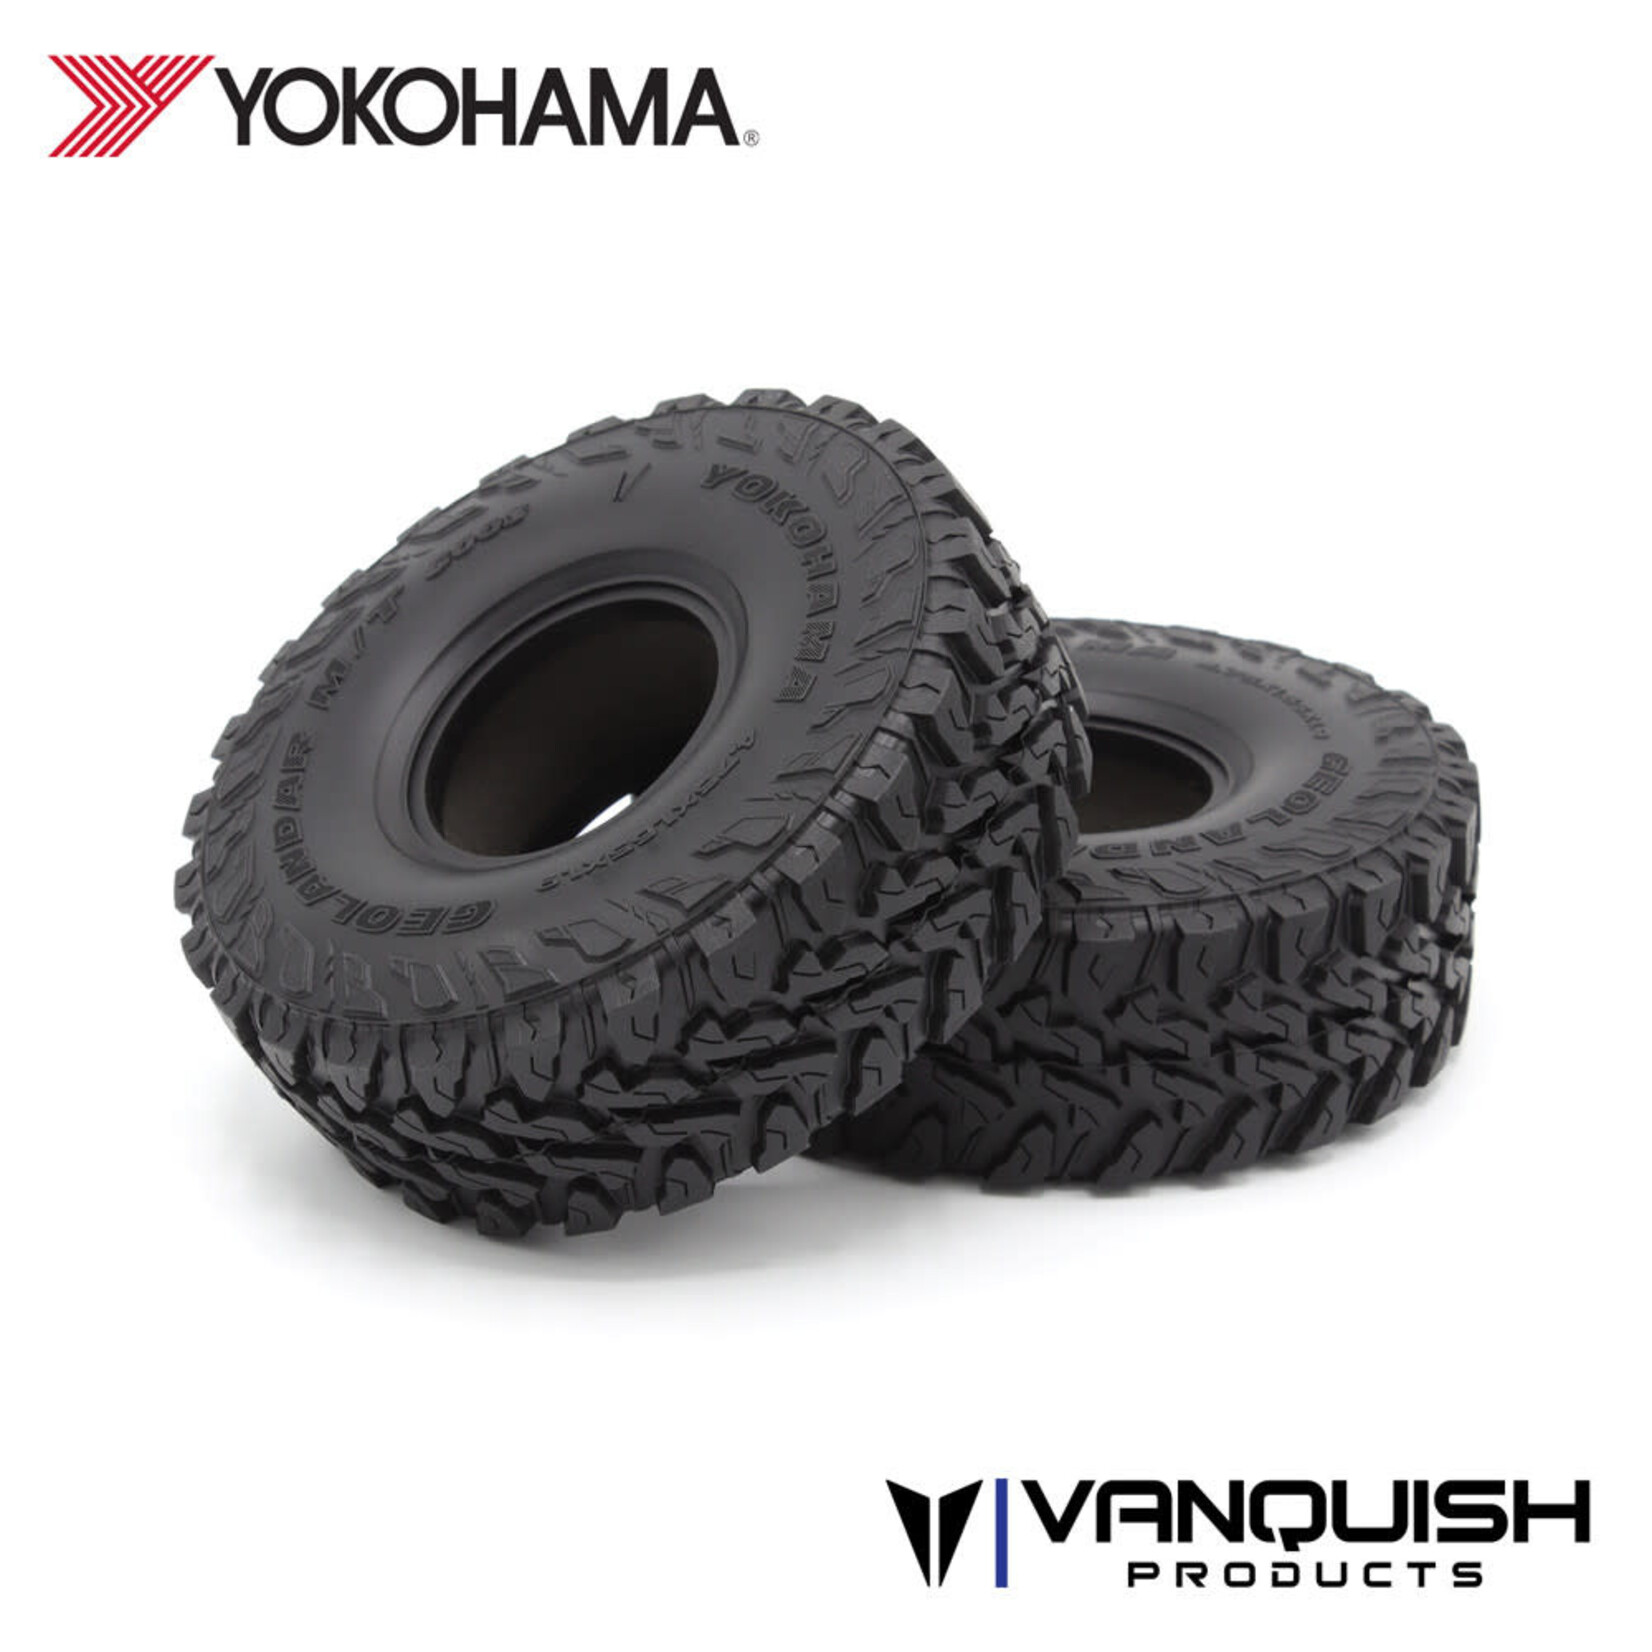 Vanquish Products Yokohama Geolandar M/T 1.9 Tires (2) Red Compound - 4.75"